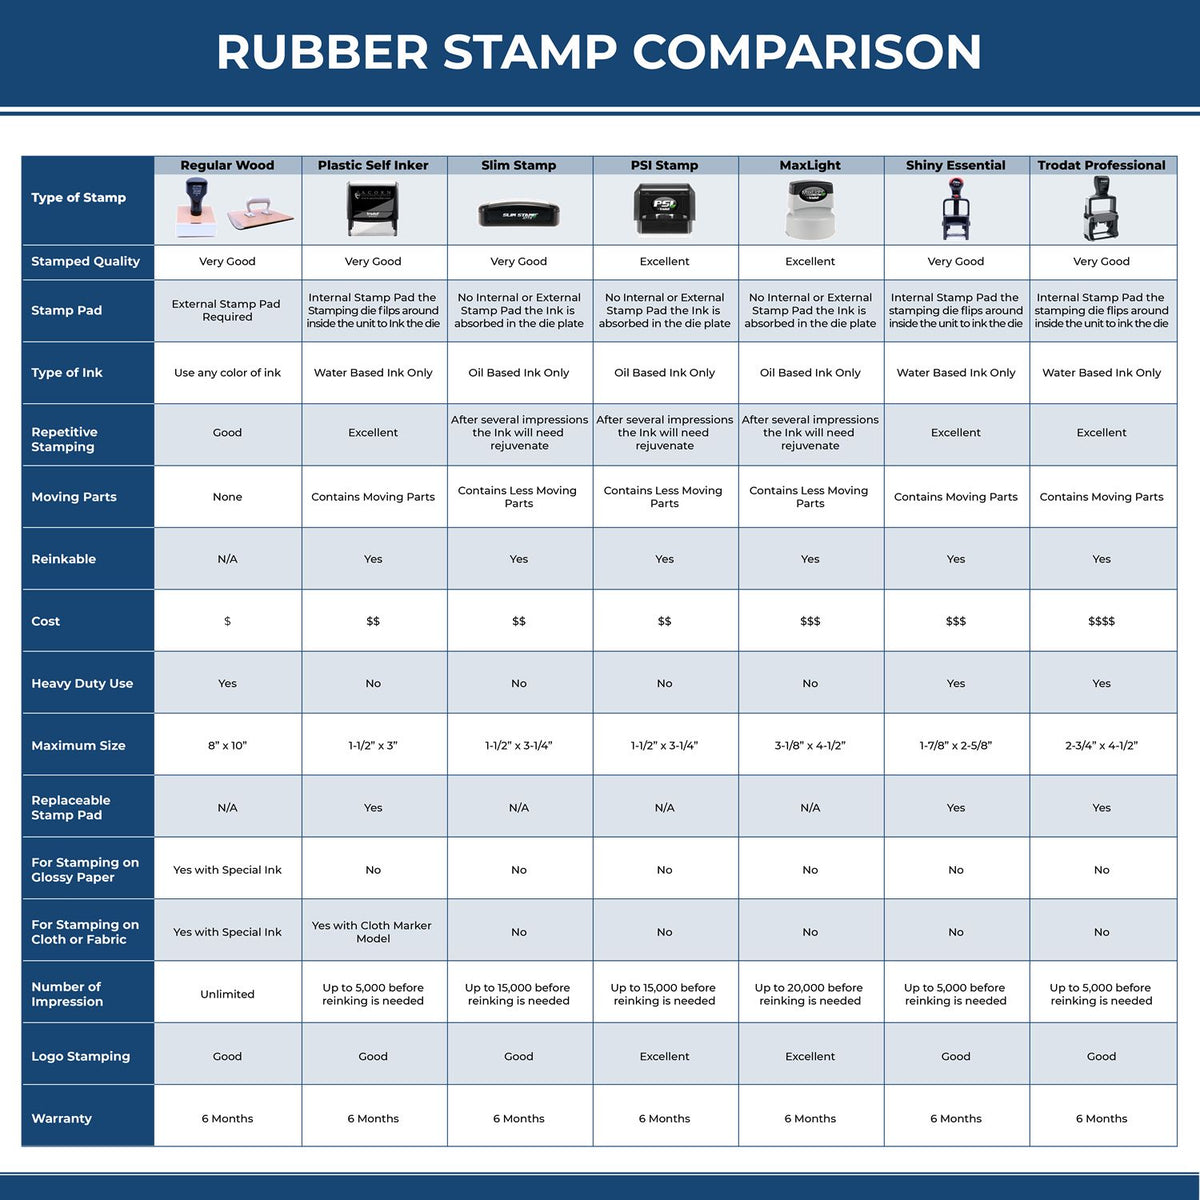 Pagado with Box Rubber Stamp 4722R Rubber Stamp Comparison